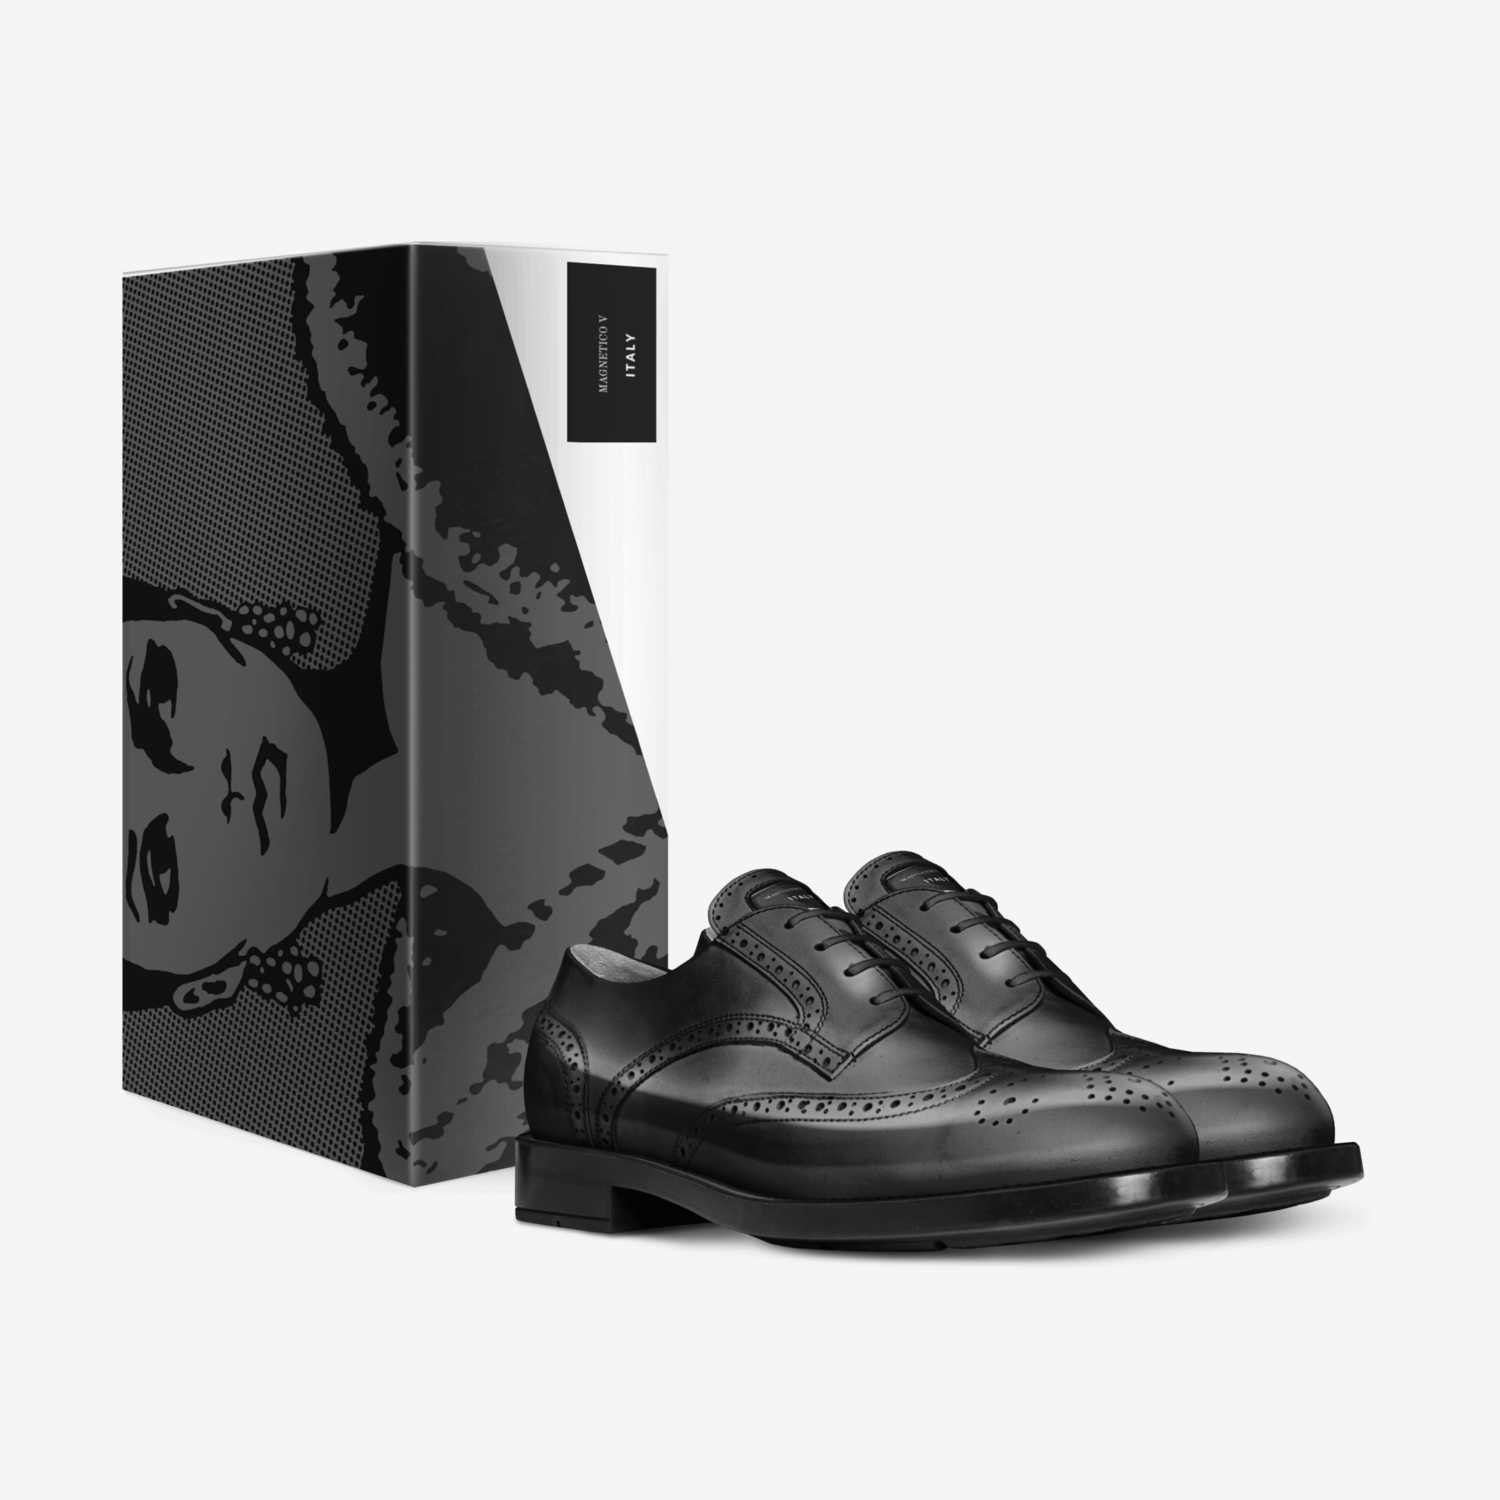 MAGNETICO V EBONY custom made in Italy shoes by Jesús Sandoval | Box view